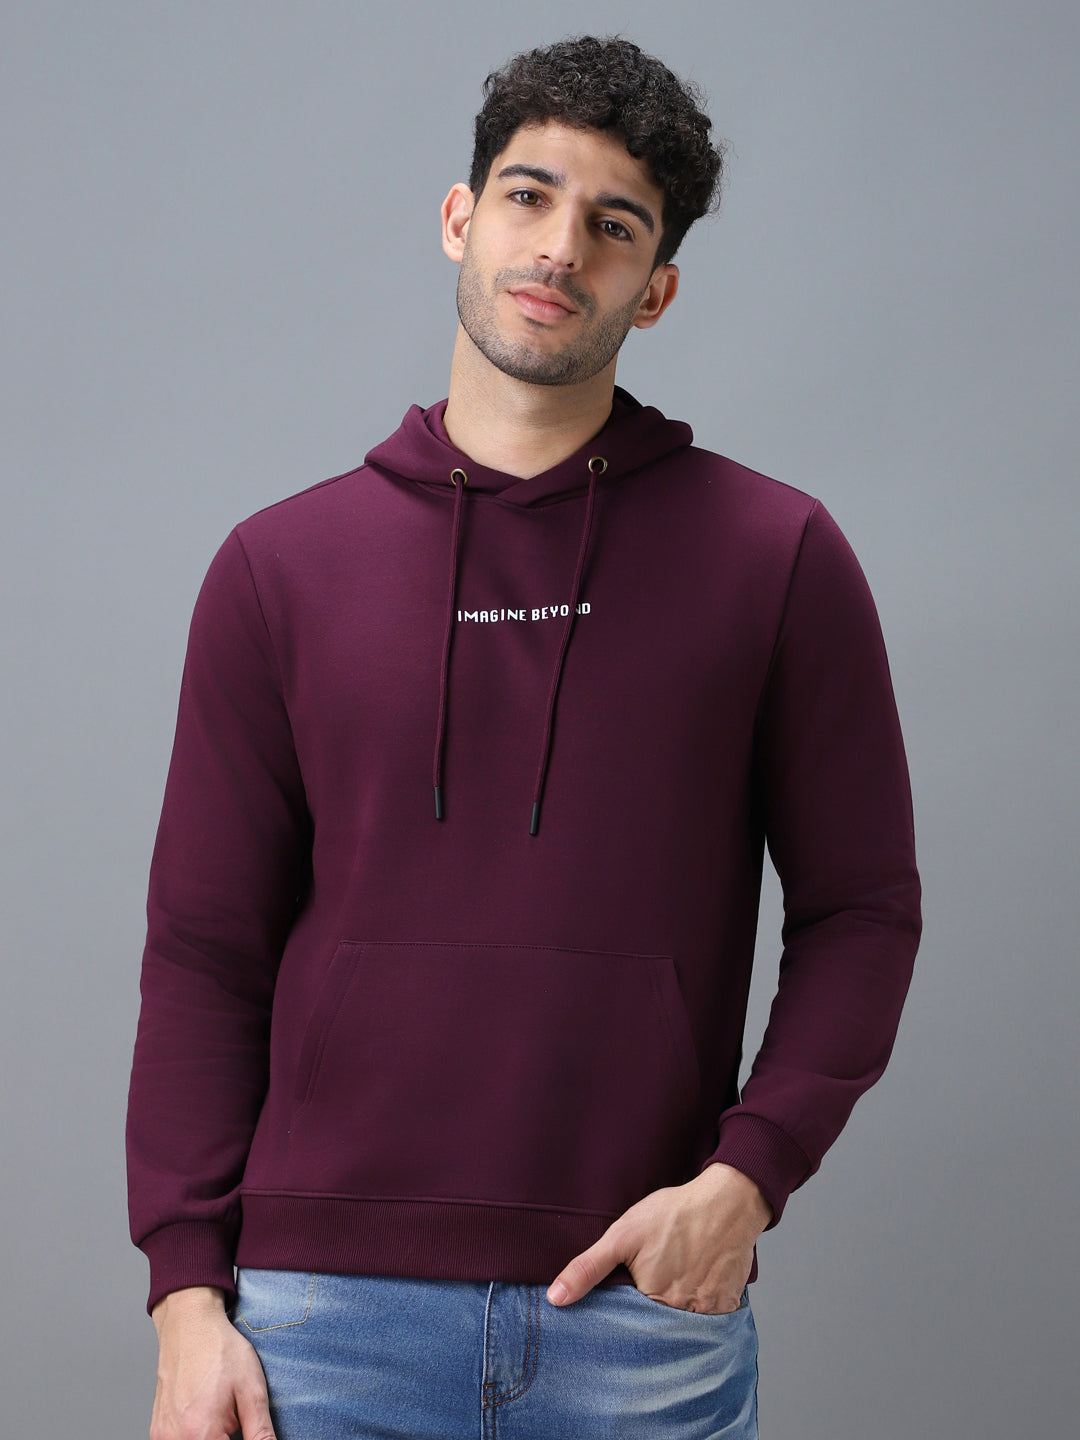 Men's Purple Cotton Graphic Print Hooded Neck Sweatshirt